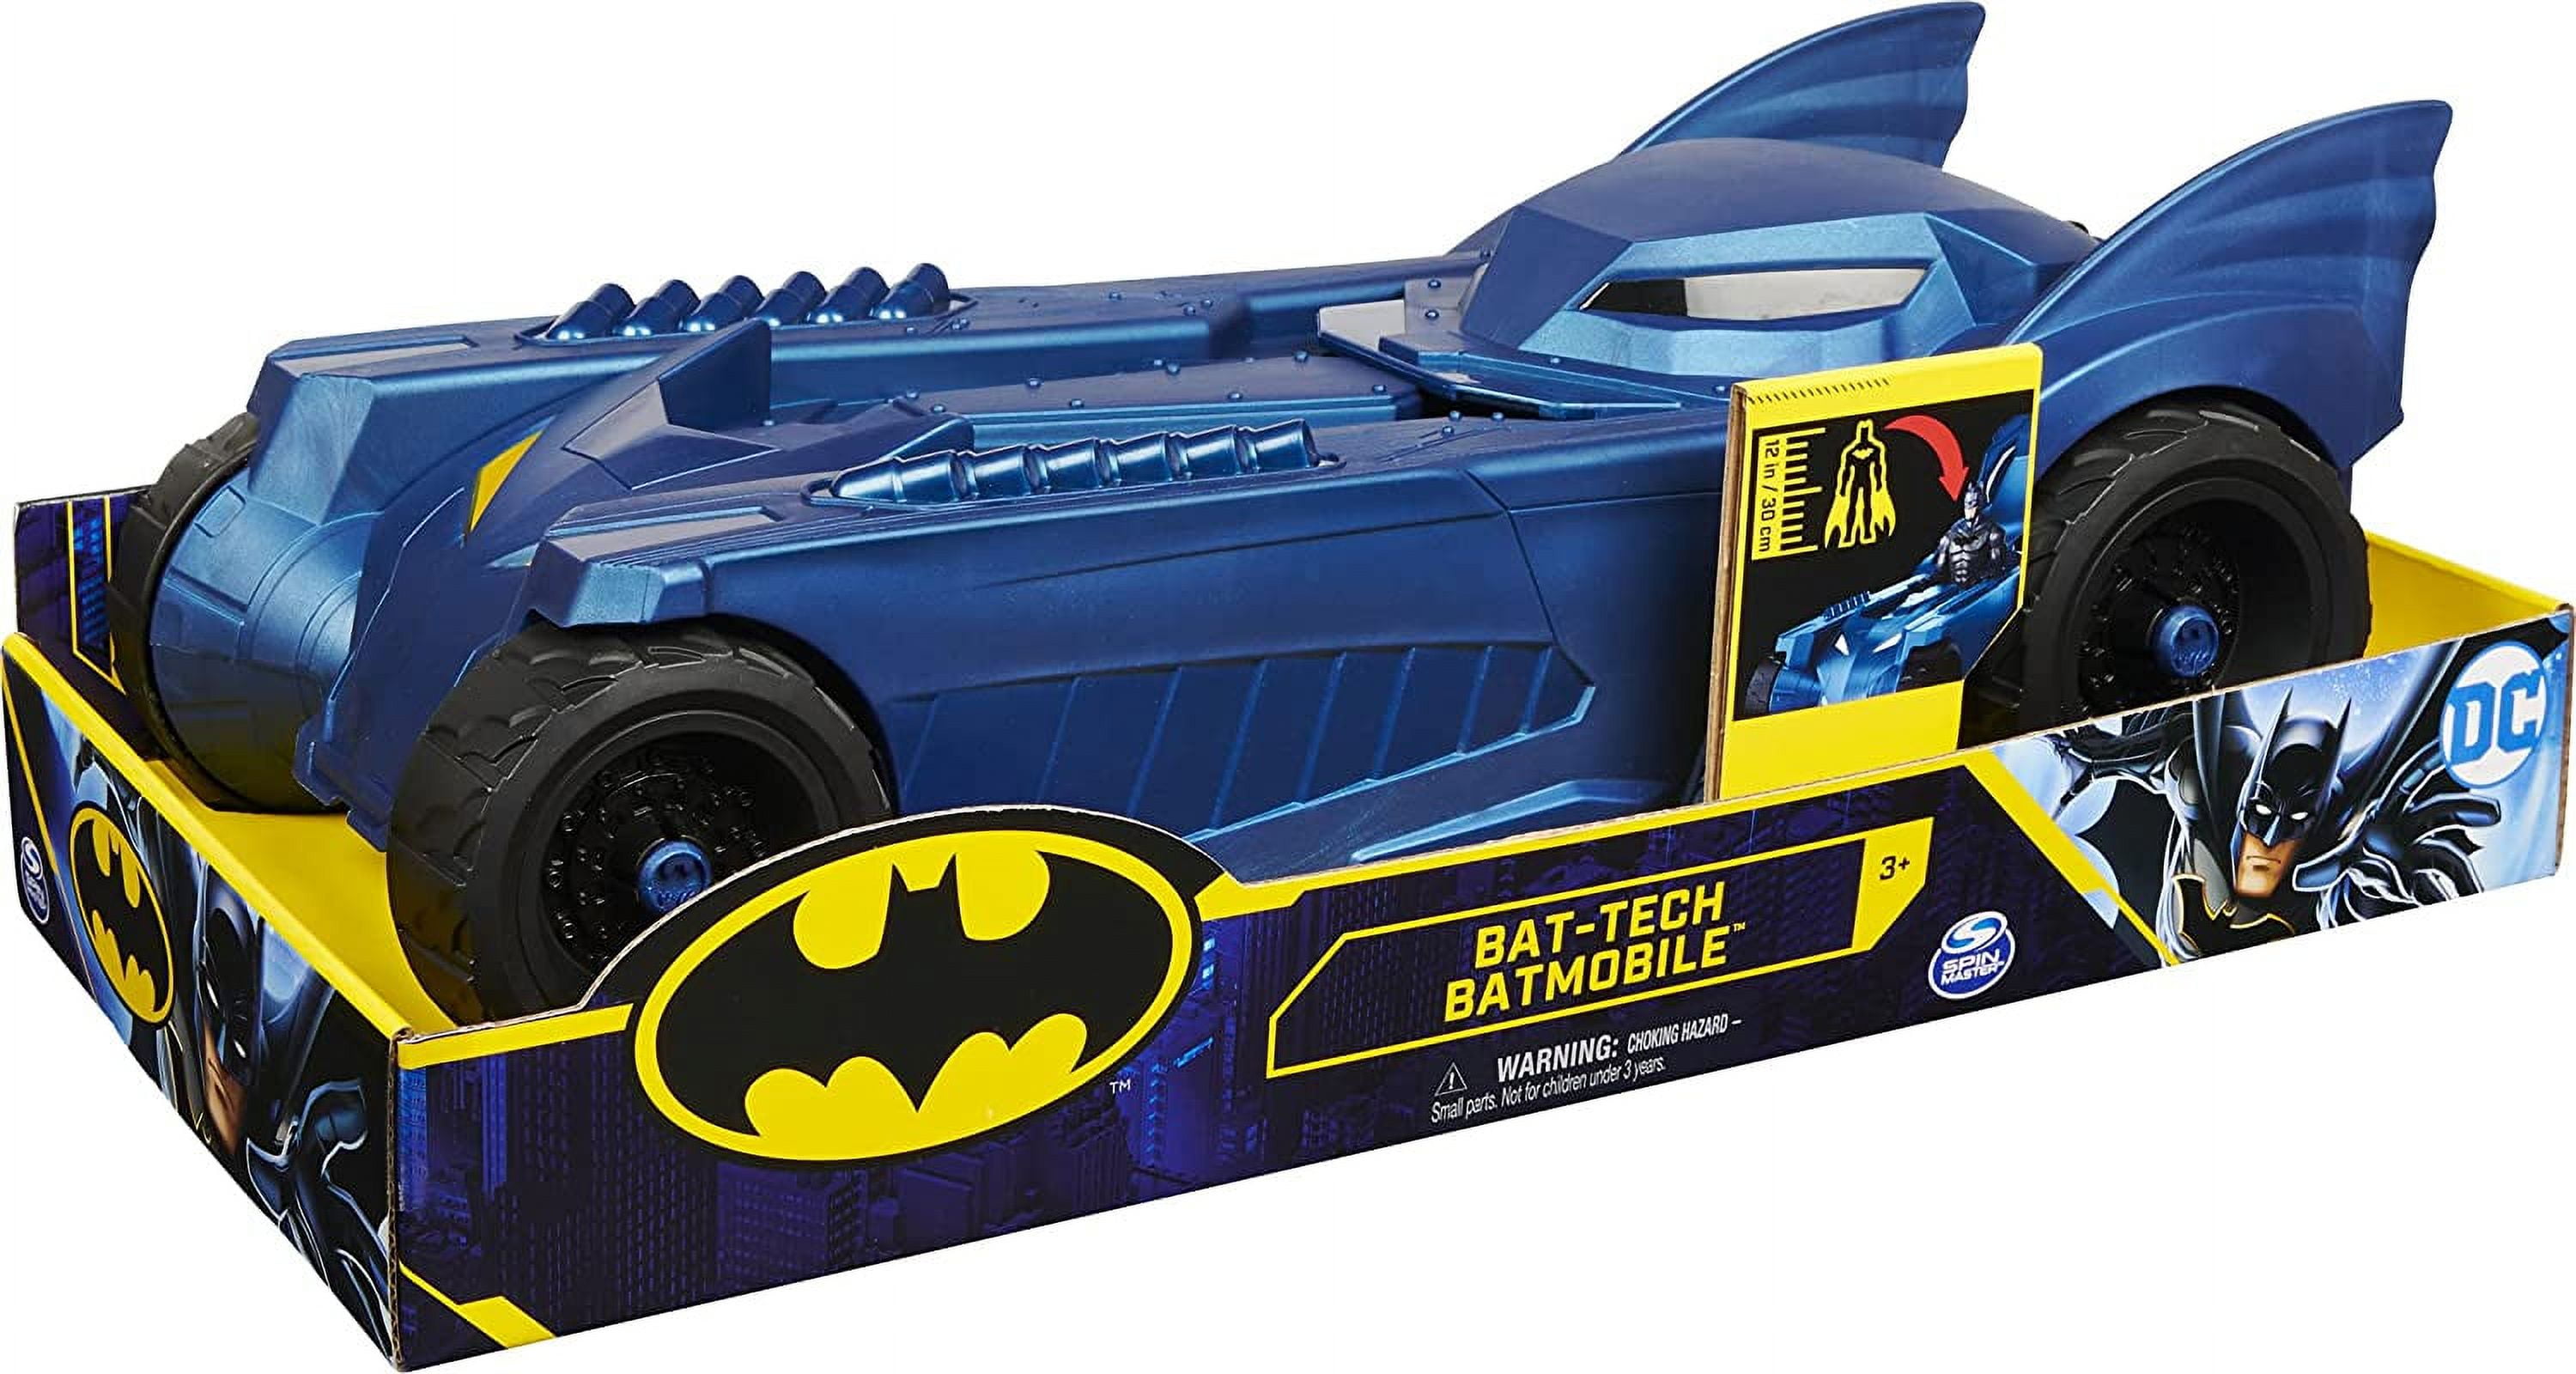 Batman Cars in Cars, RC, Drones & Trains 